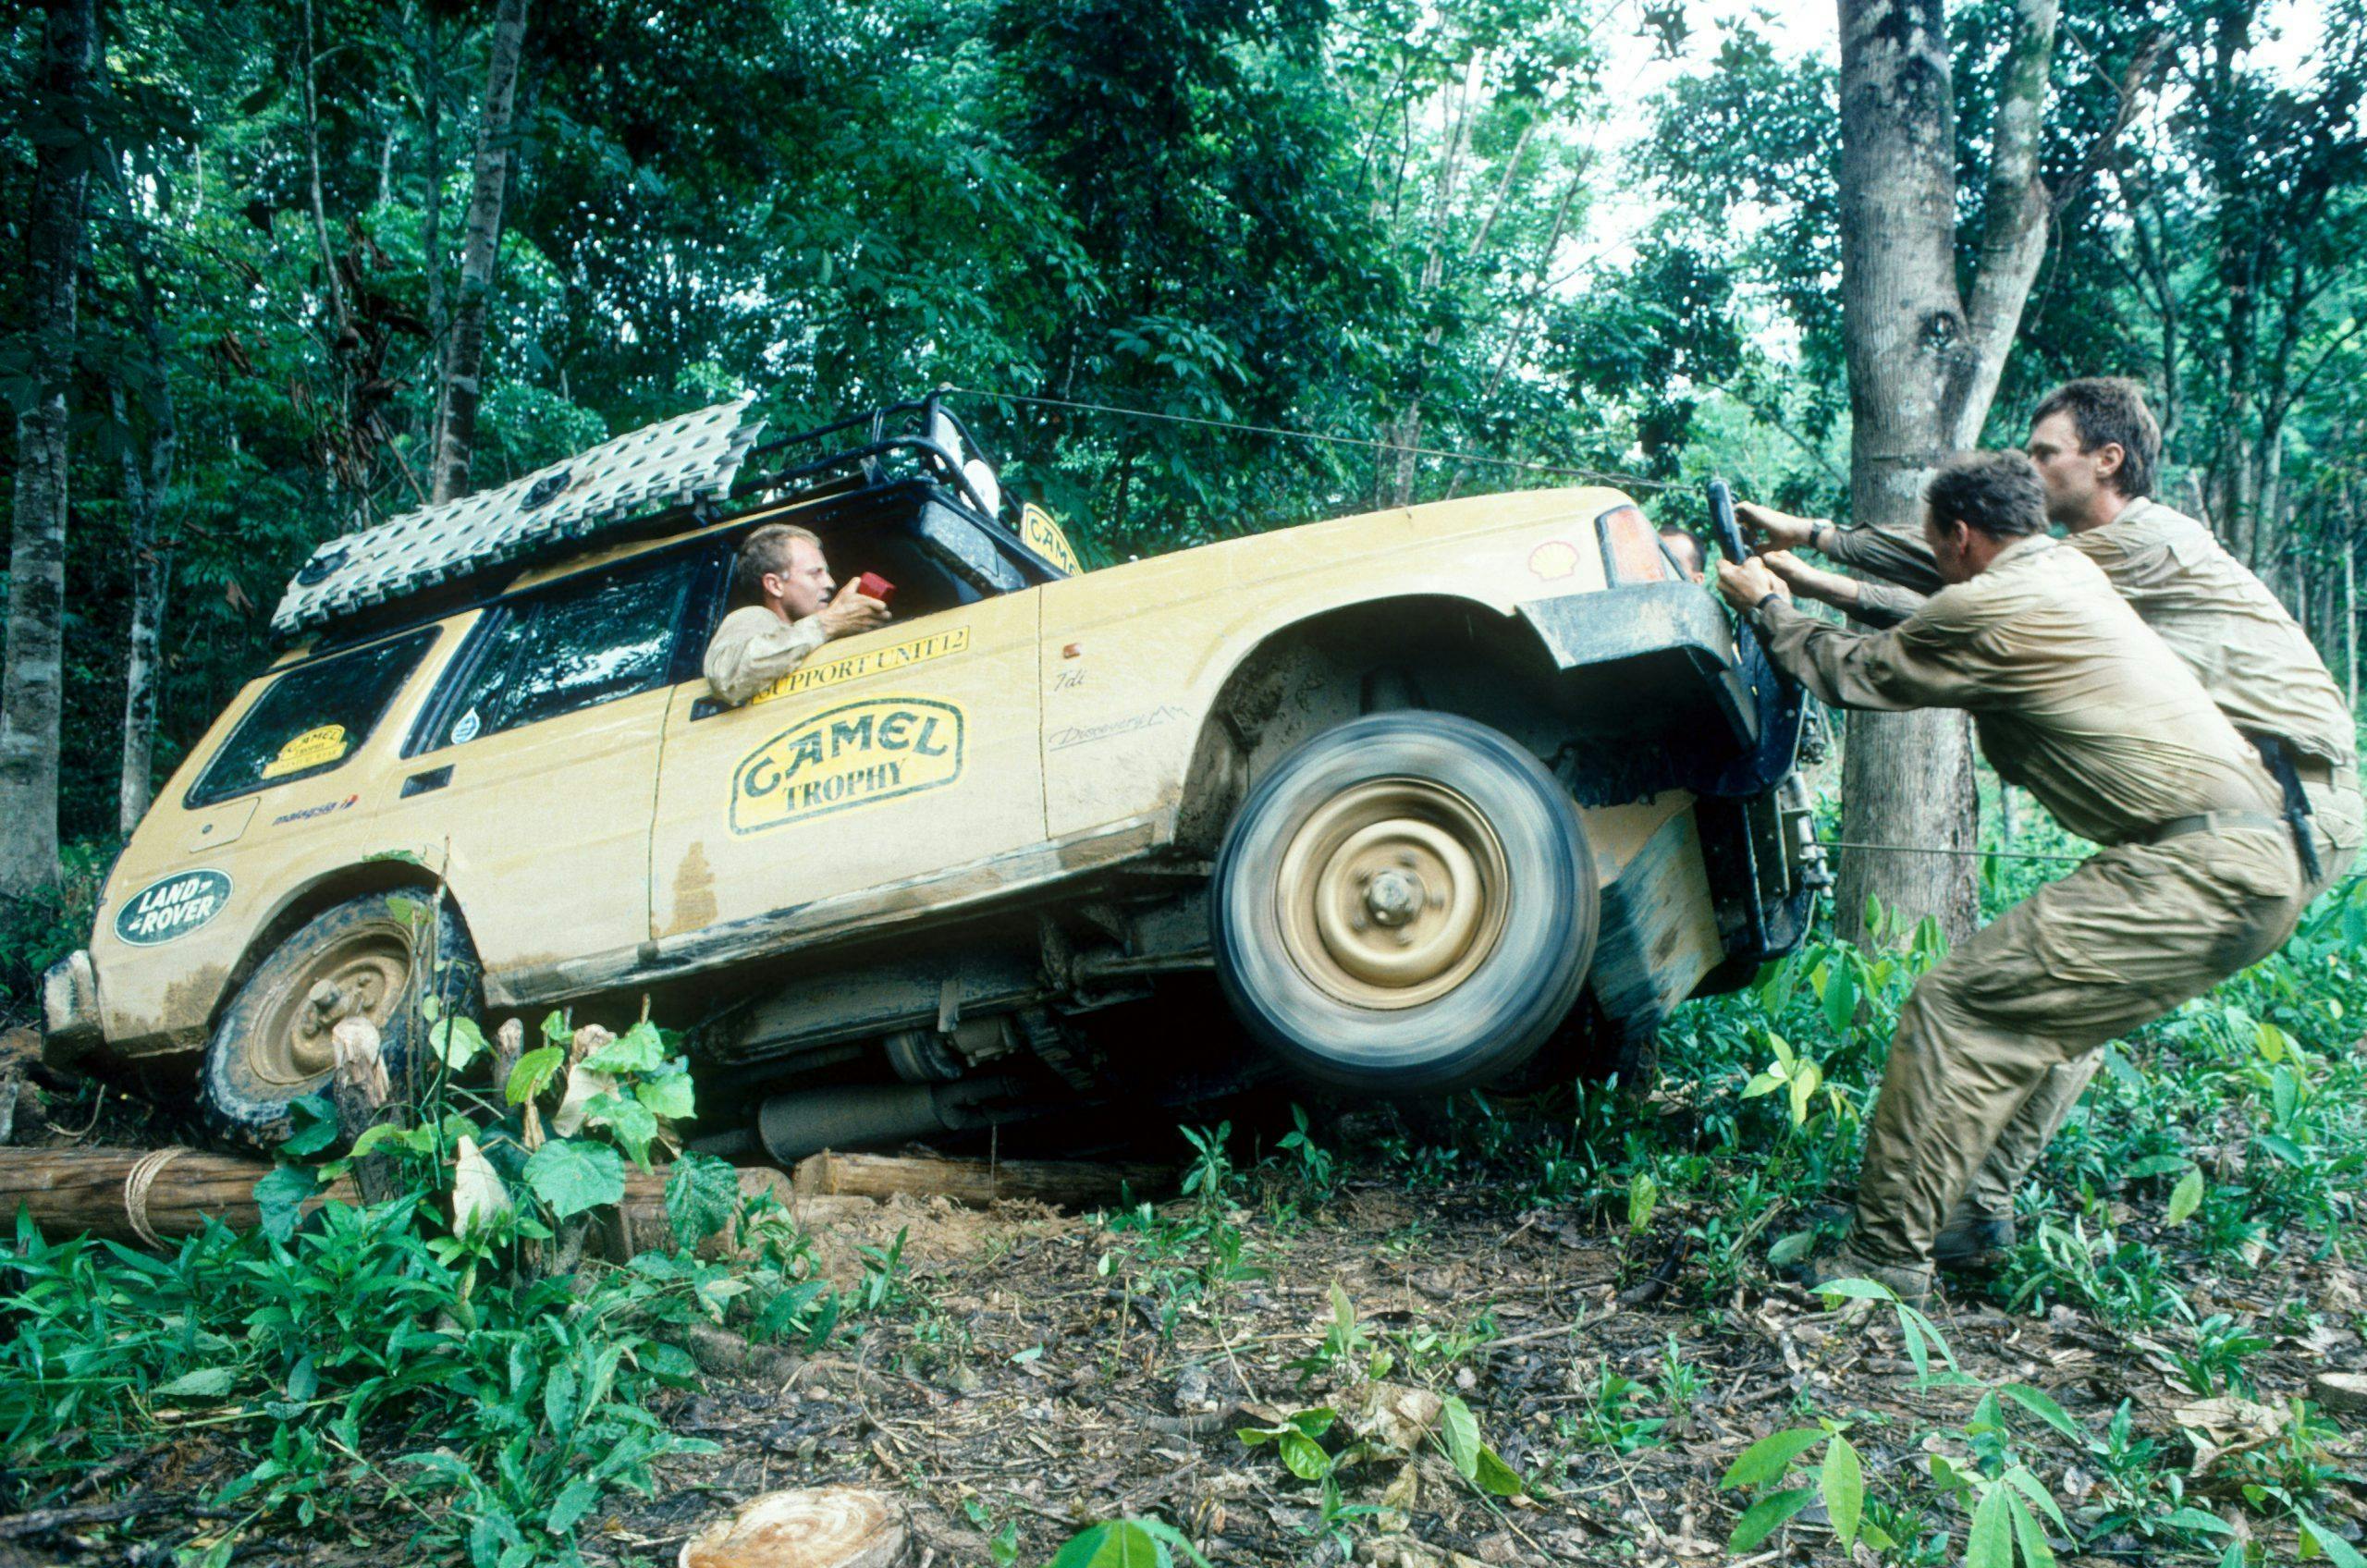 1993 Camel Trophy pulling stuck truck